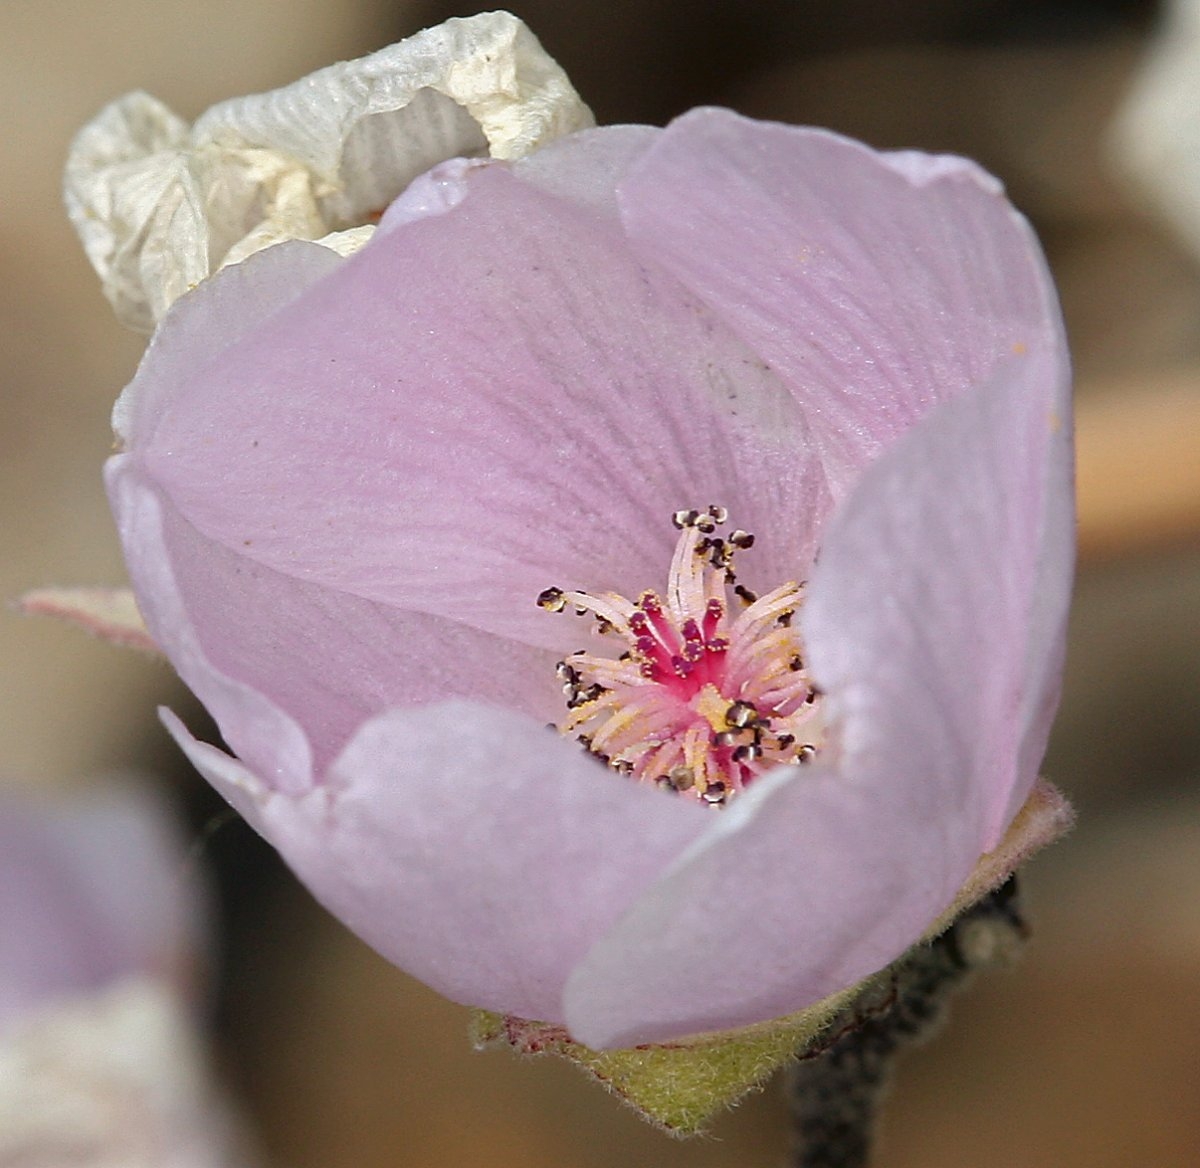 Sphaeralcea ambigua var. rosacea